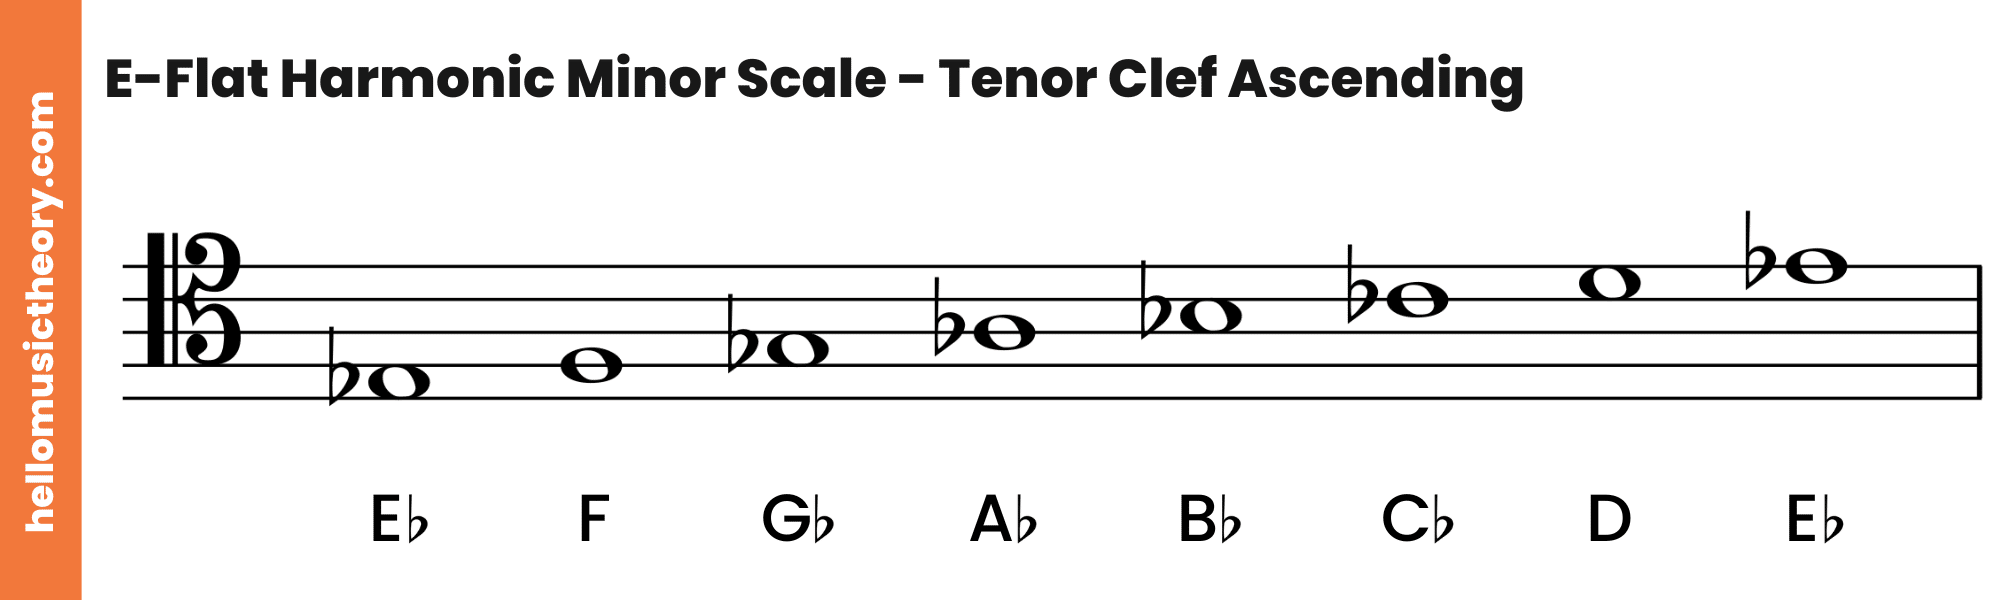 E-Flat Harmonic Minor Scale Tenor Clef Ascending